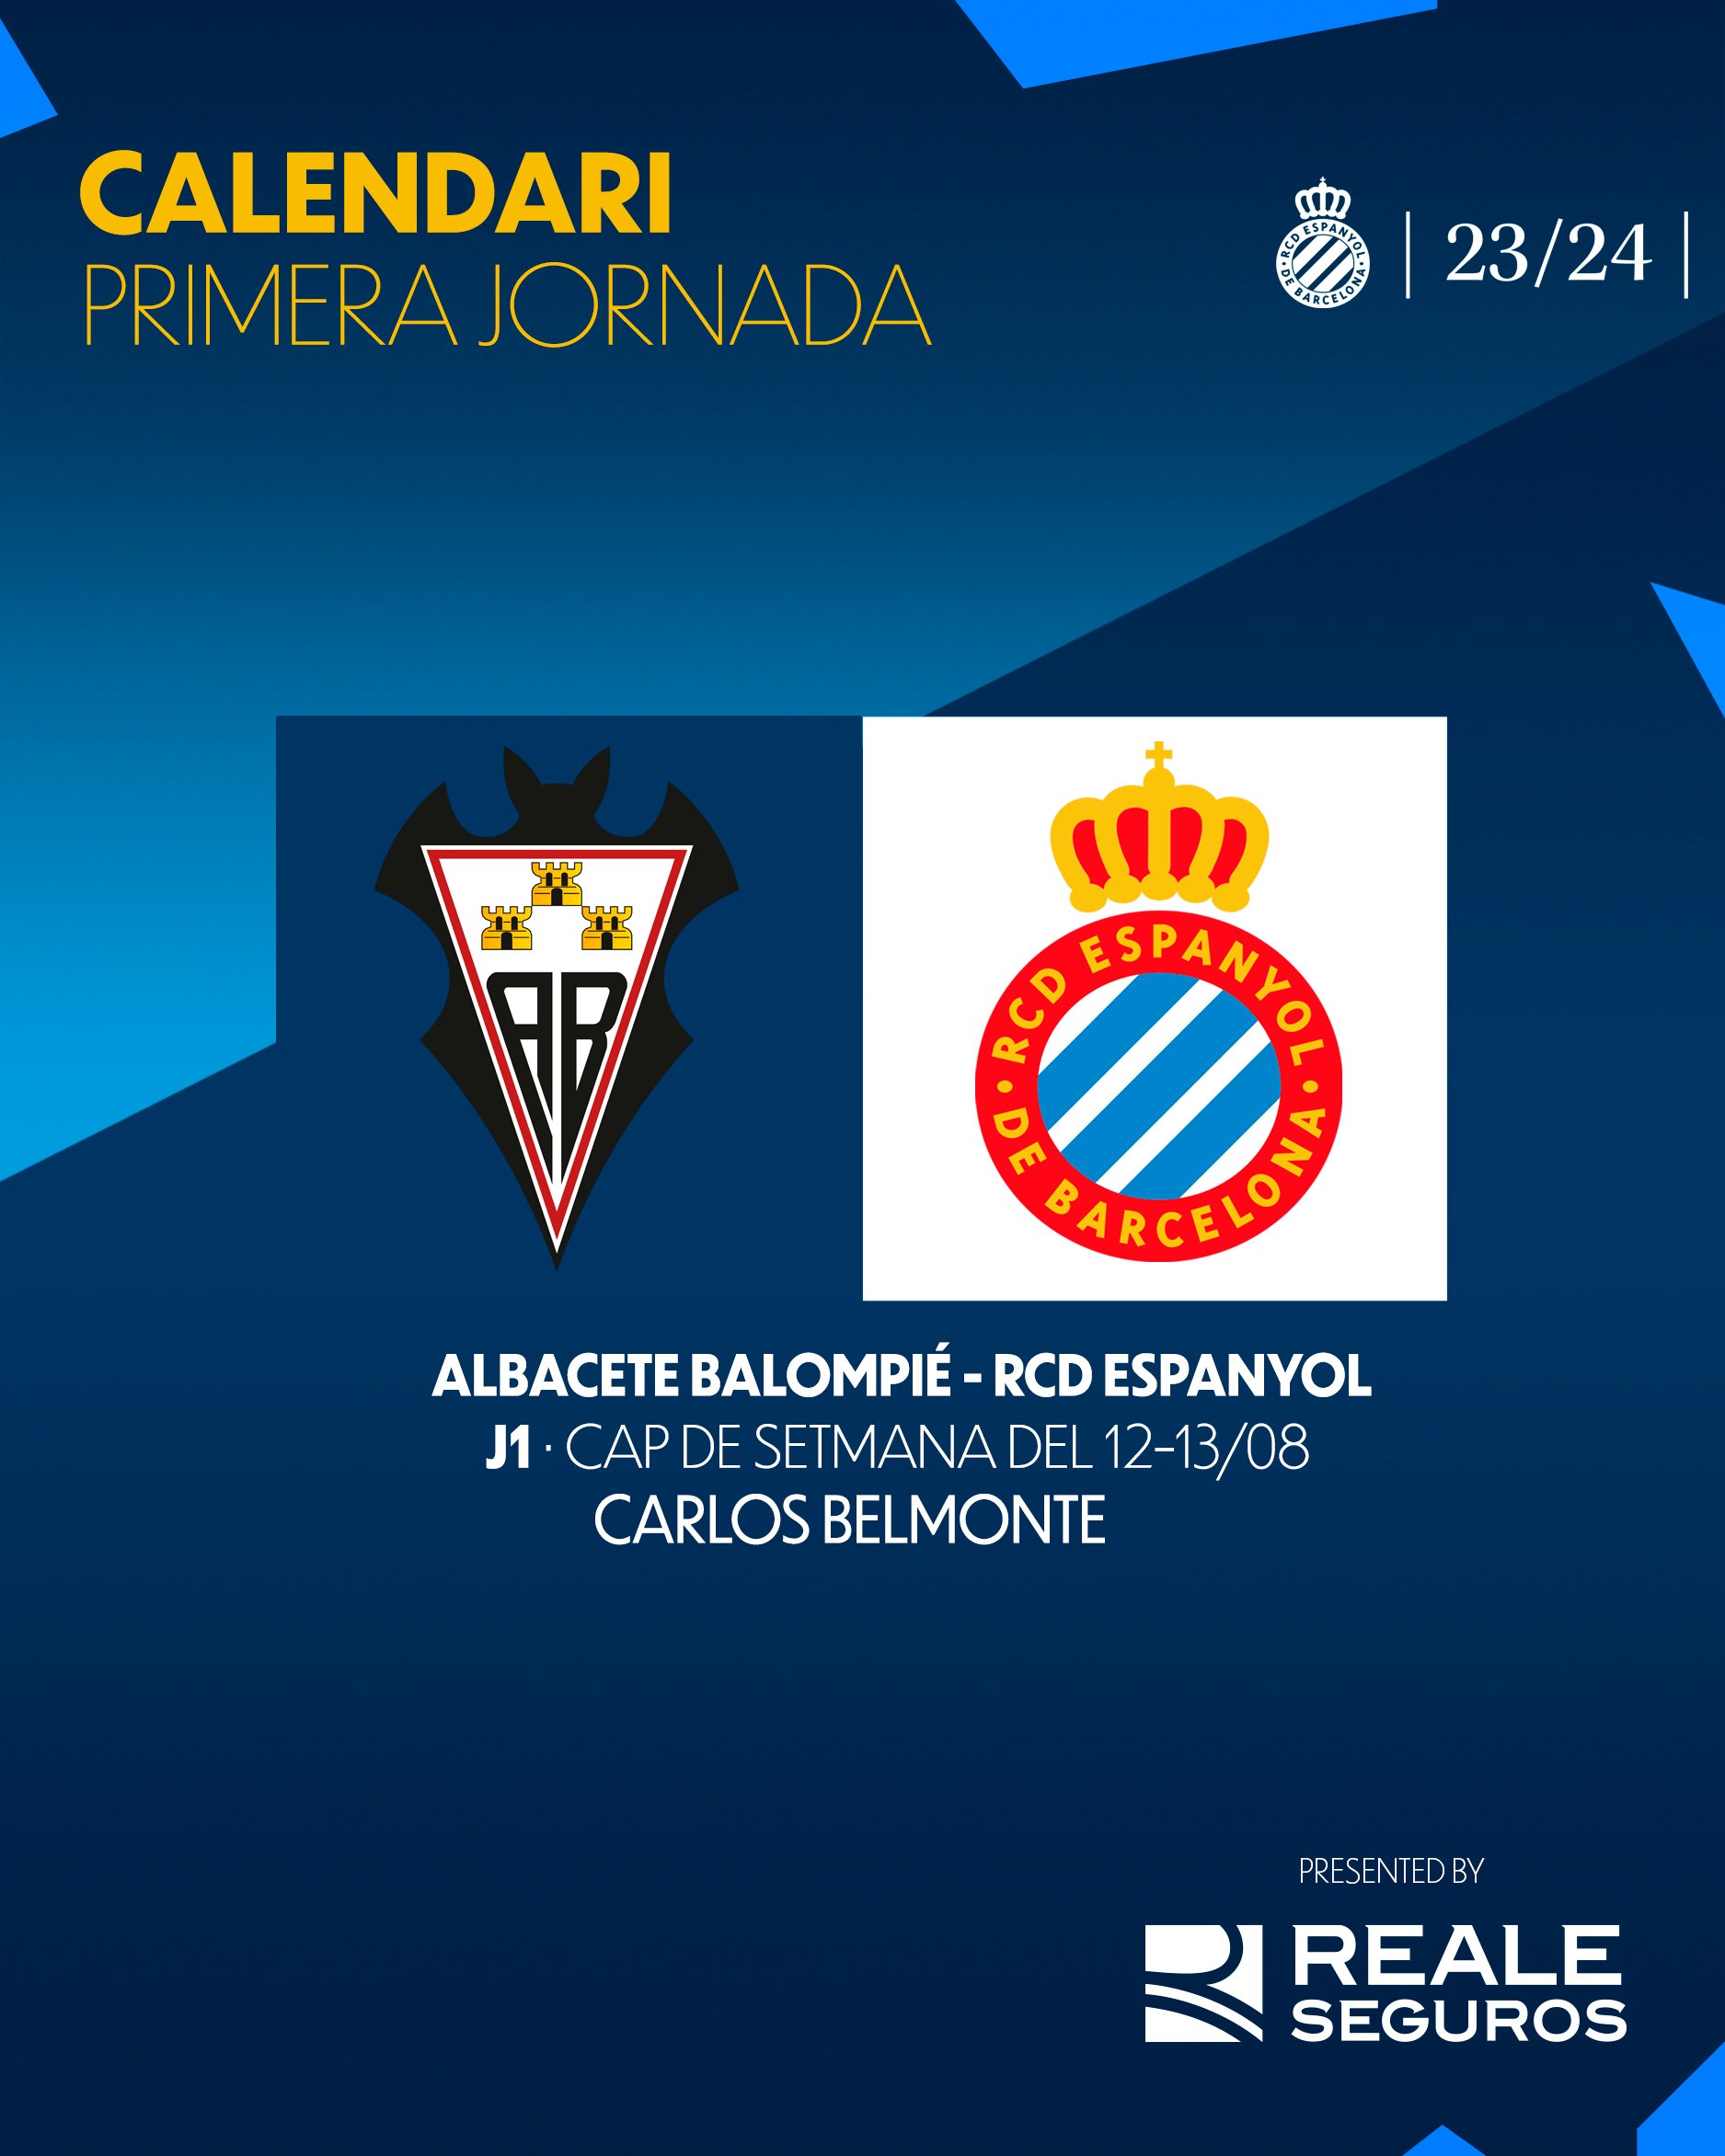 RCD Espanyol de Barcelona on Twitter: "🗓️ tenim calendari per a la temporada 23/24! ✓ 𝐏𝐫𝐢𝐦𝐞𝐫 𝐫𝐢𝐯𝐚𝐥: @AlbaceteBPSAD 👉🏻 12/13 d'agost 🏟️ Carlos Belmonte #RCDE / Twitter